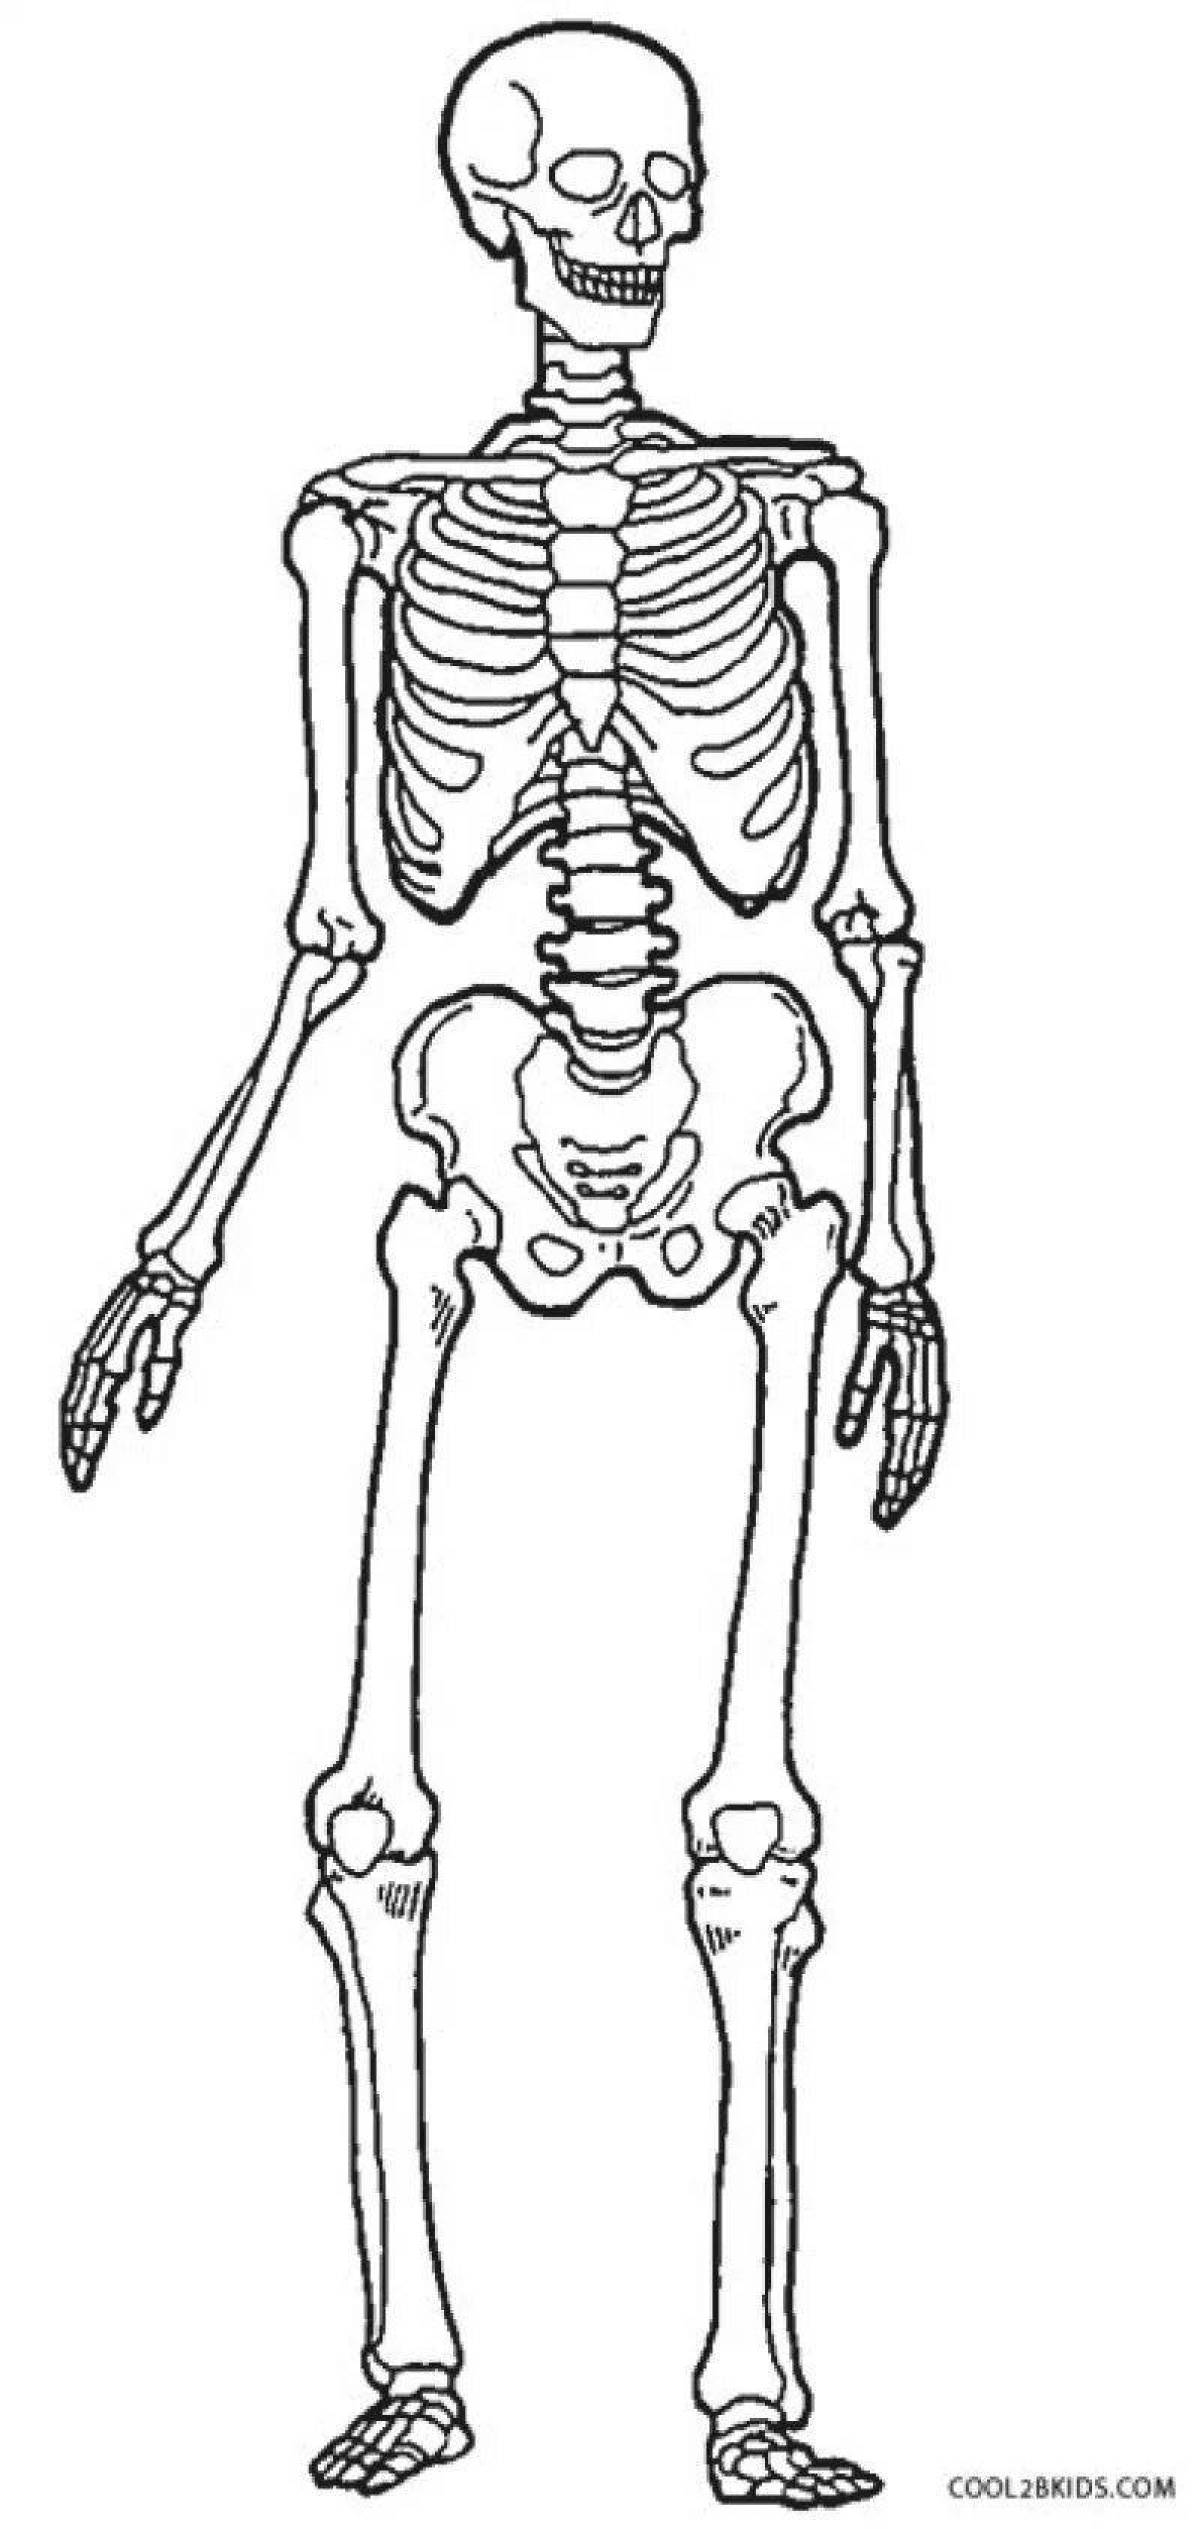 Fun coloring of the human skeleton